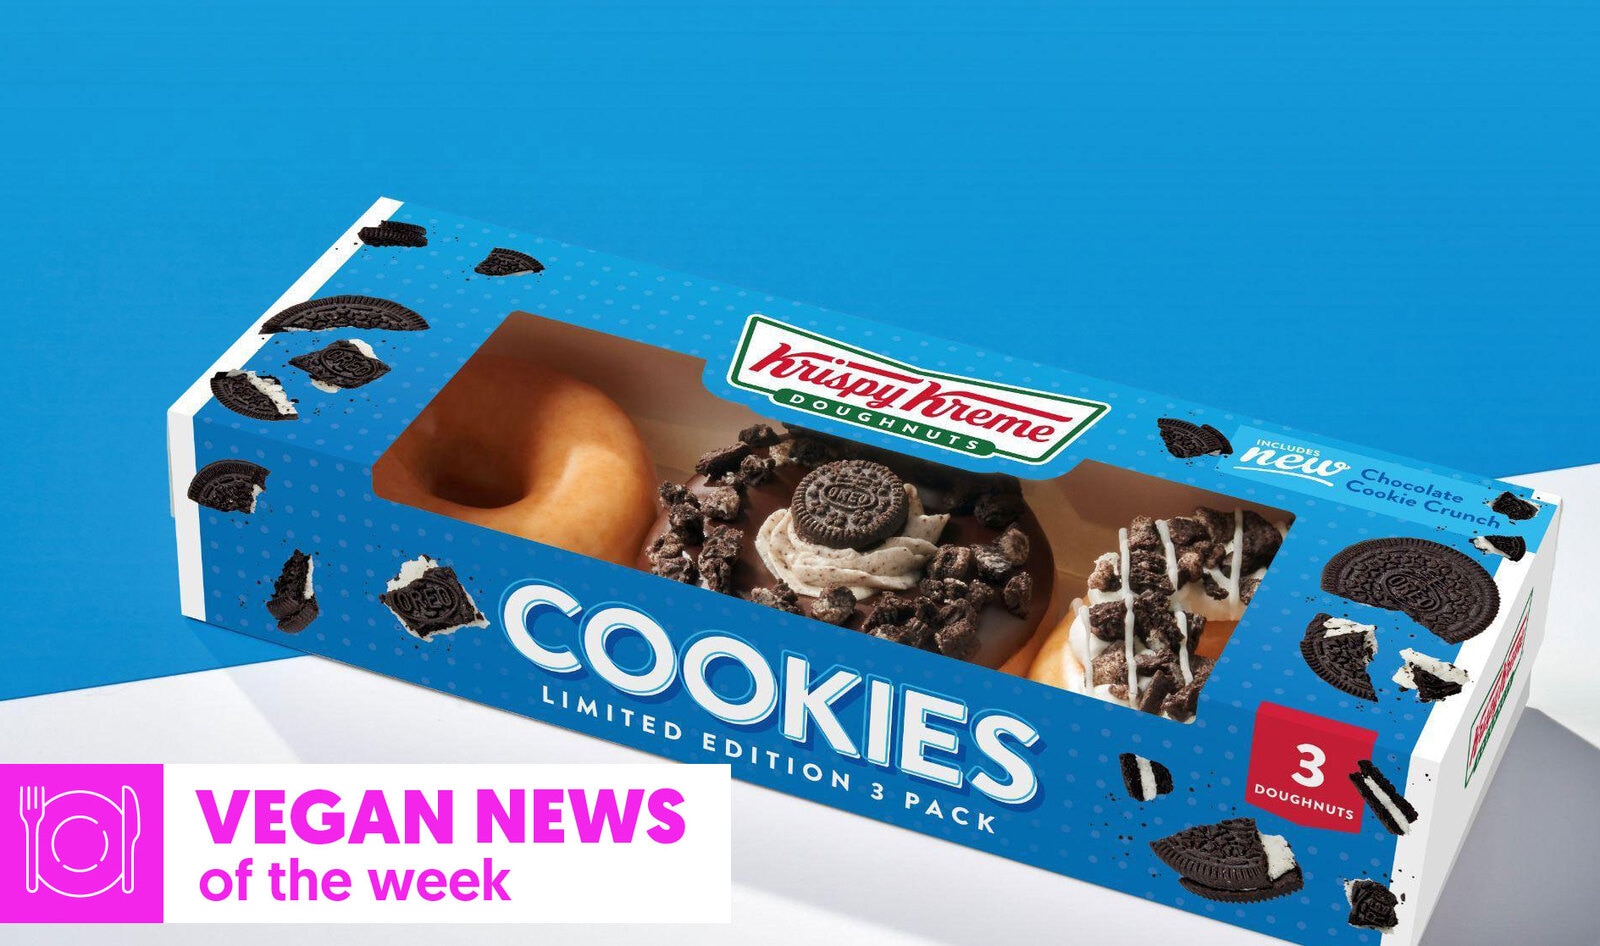 Vegan News of the Week: Krispy Kreme Cookie Doughnuts, Veganuary Deals, and More